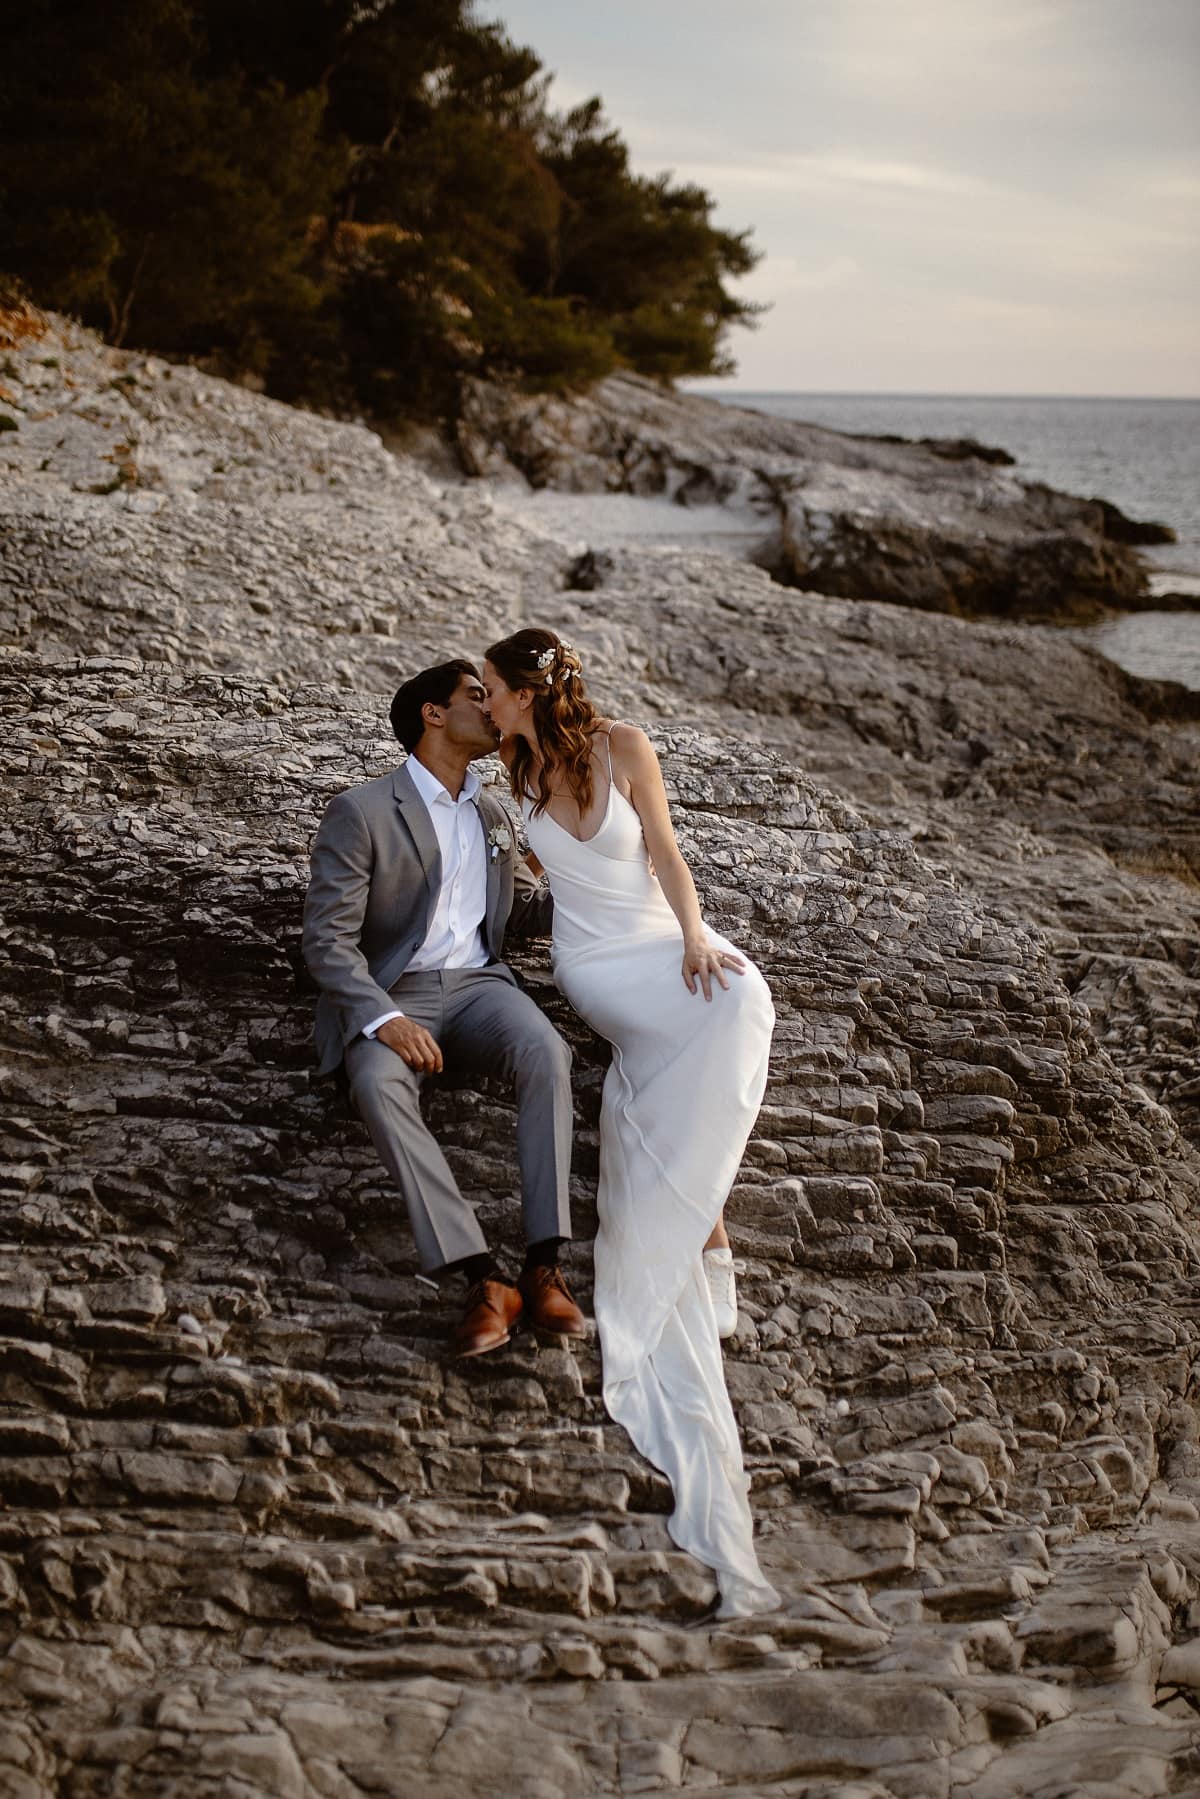 Love & Ventures Europe & Croatia Elopement & Wedding Photography & Videography